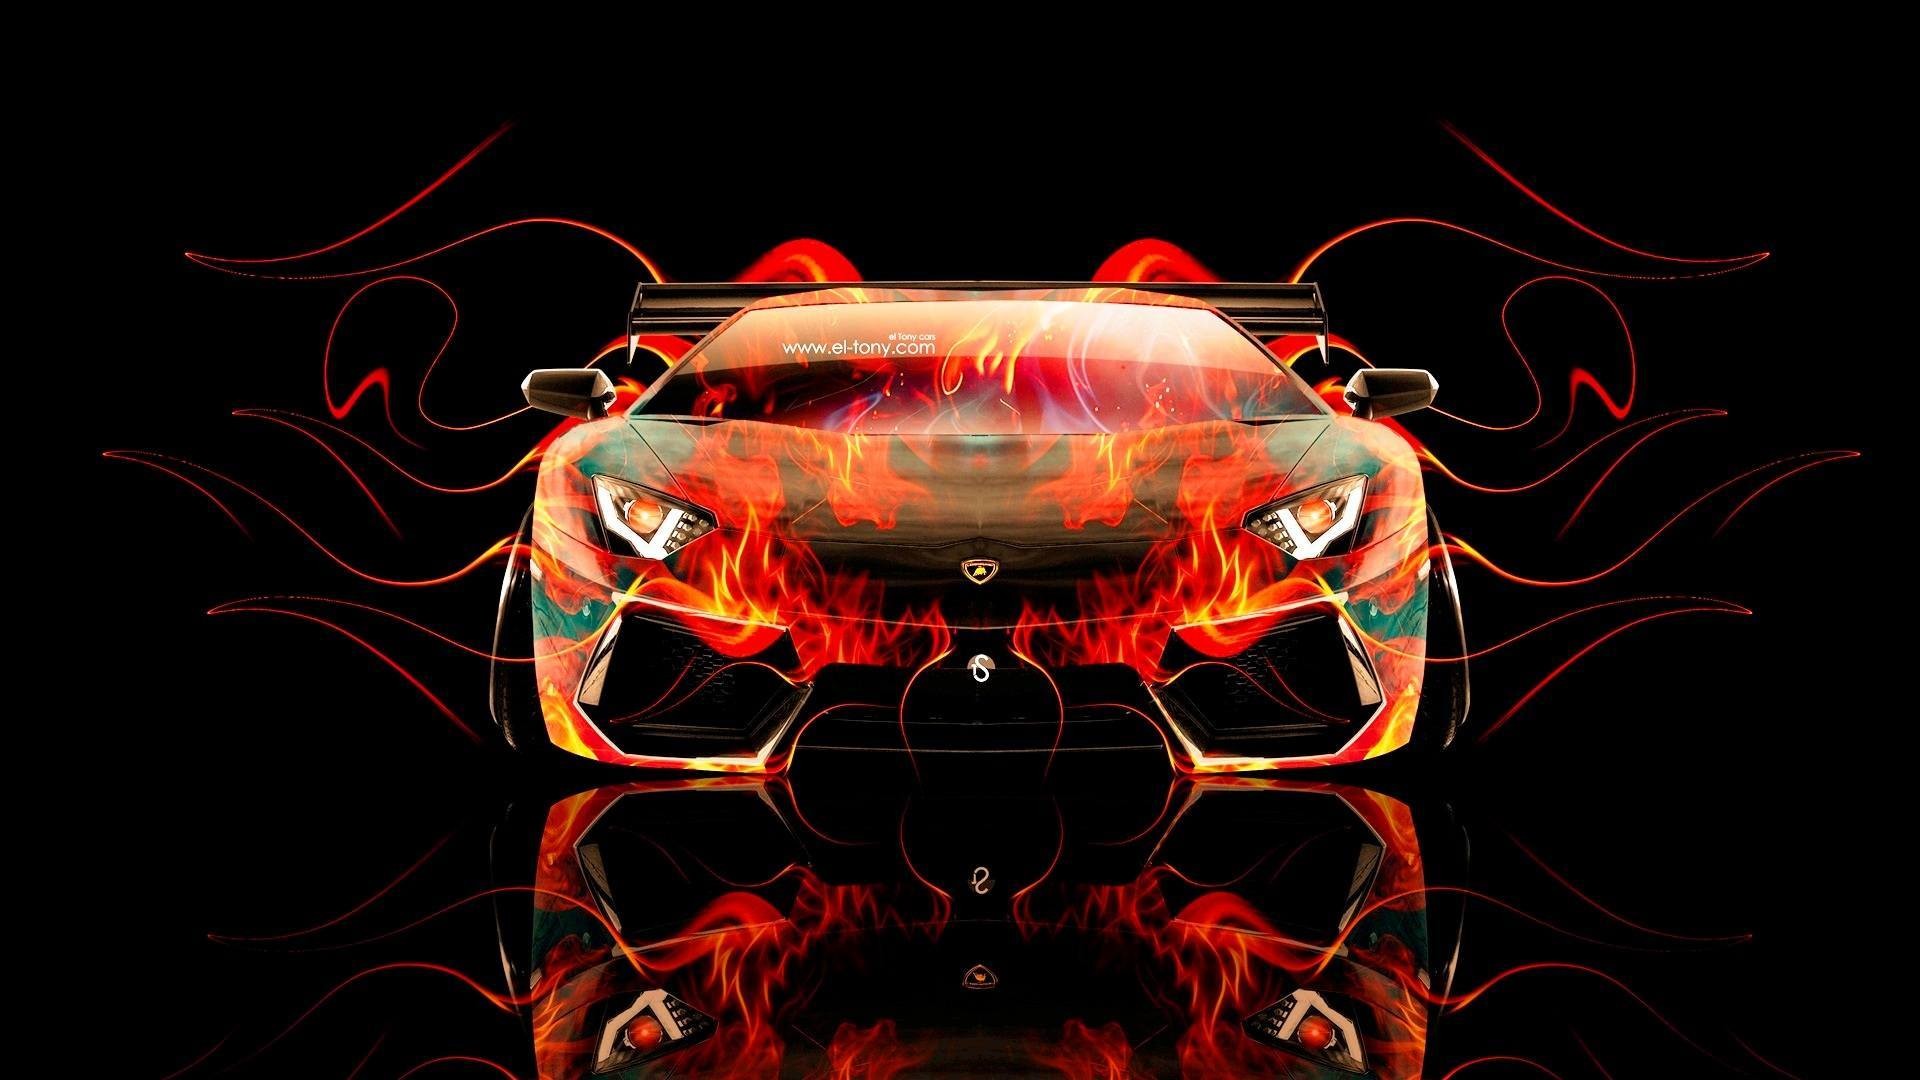 1920x1080 Design Talent Showcase - El-Tony.com Brings Sensual Elements Fire and Water  to YOUR Car Wallpapers